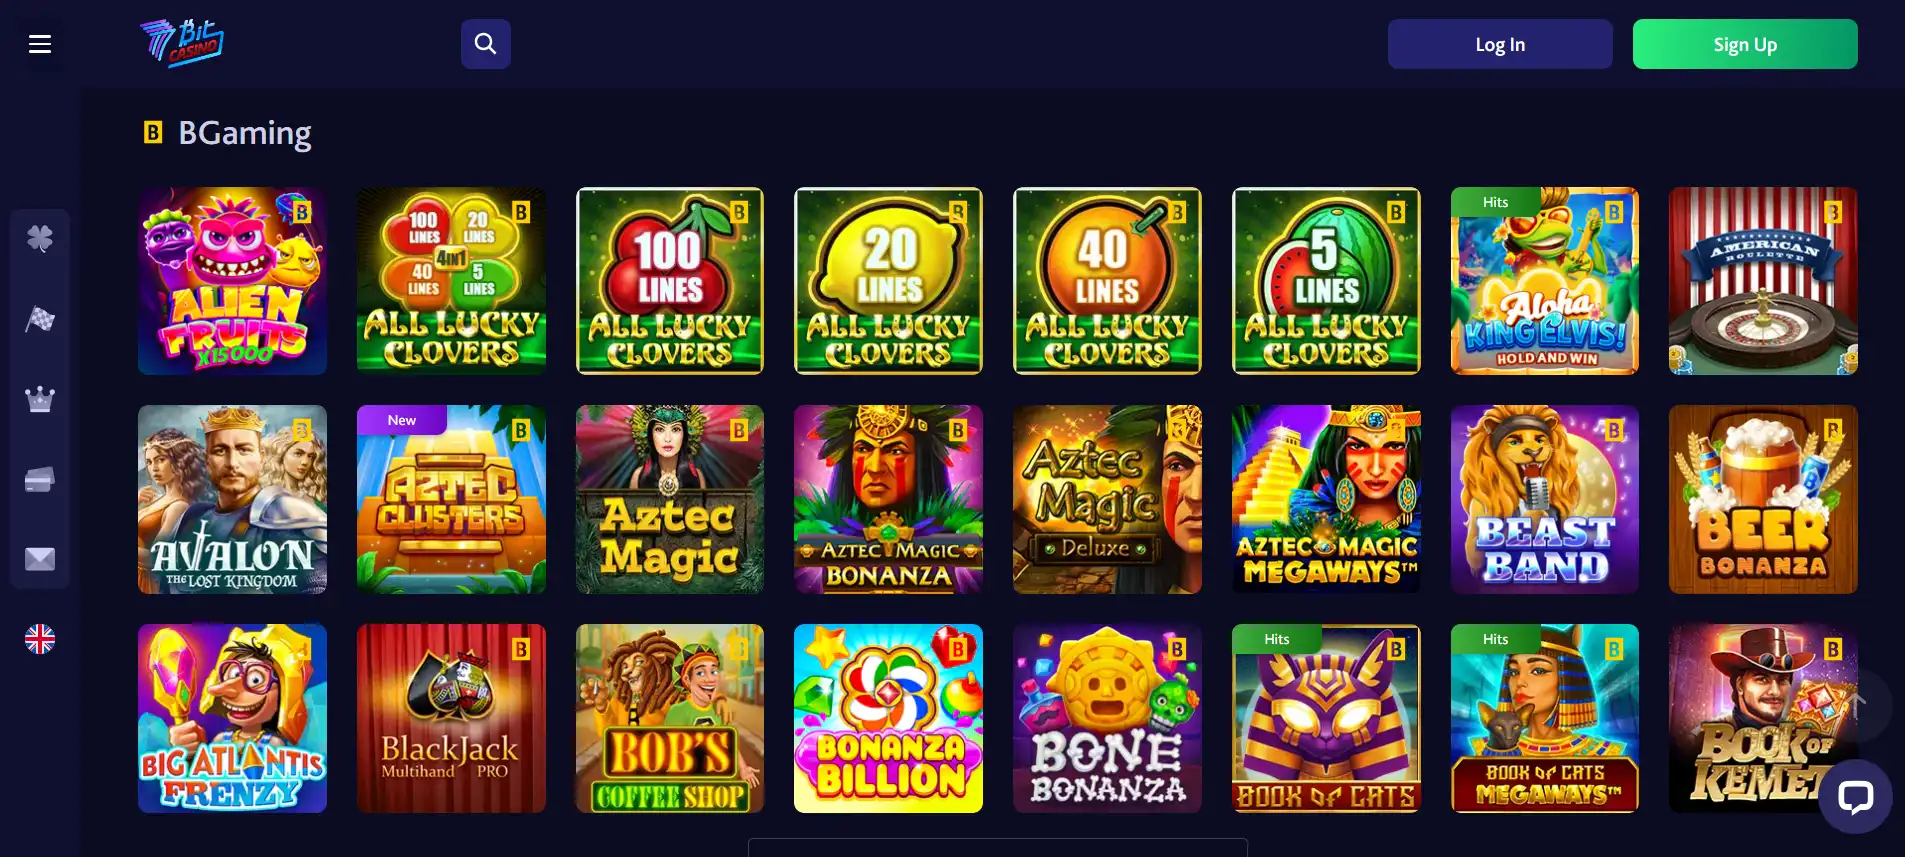 Metaspins casino's bGaming selection